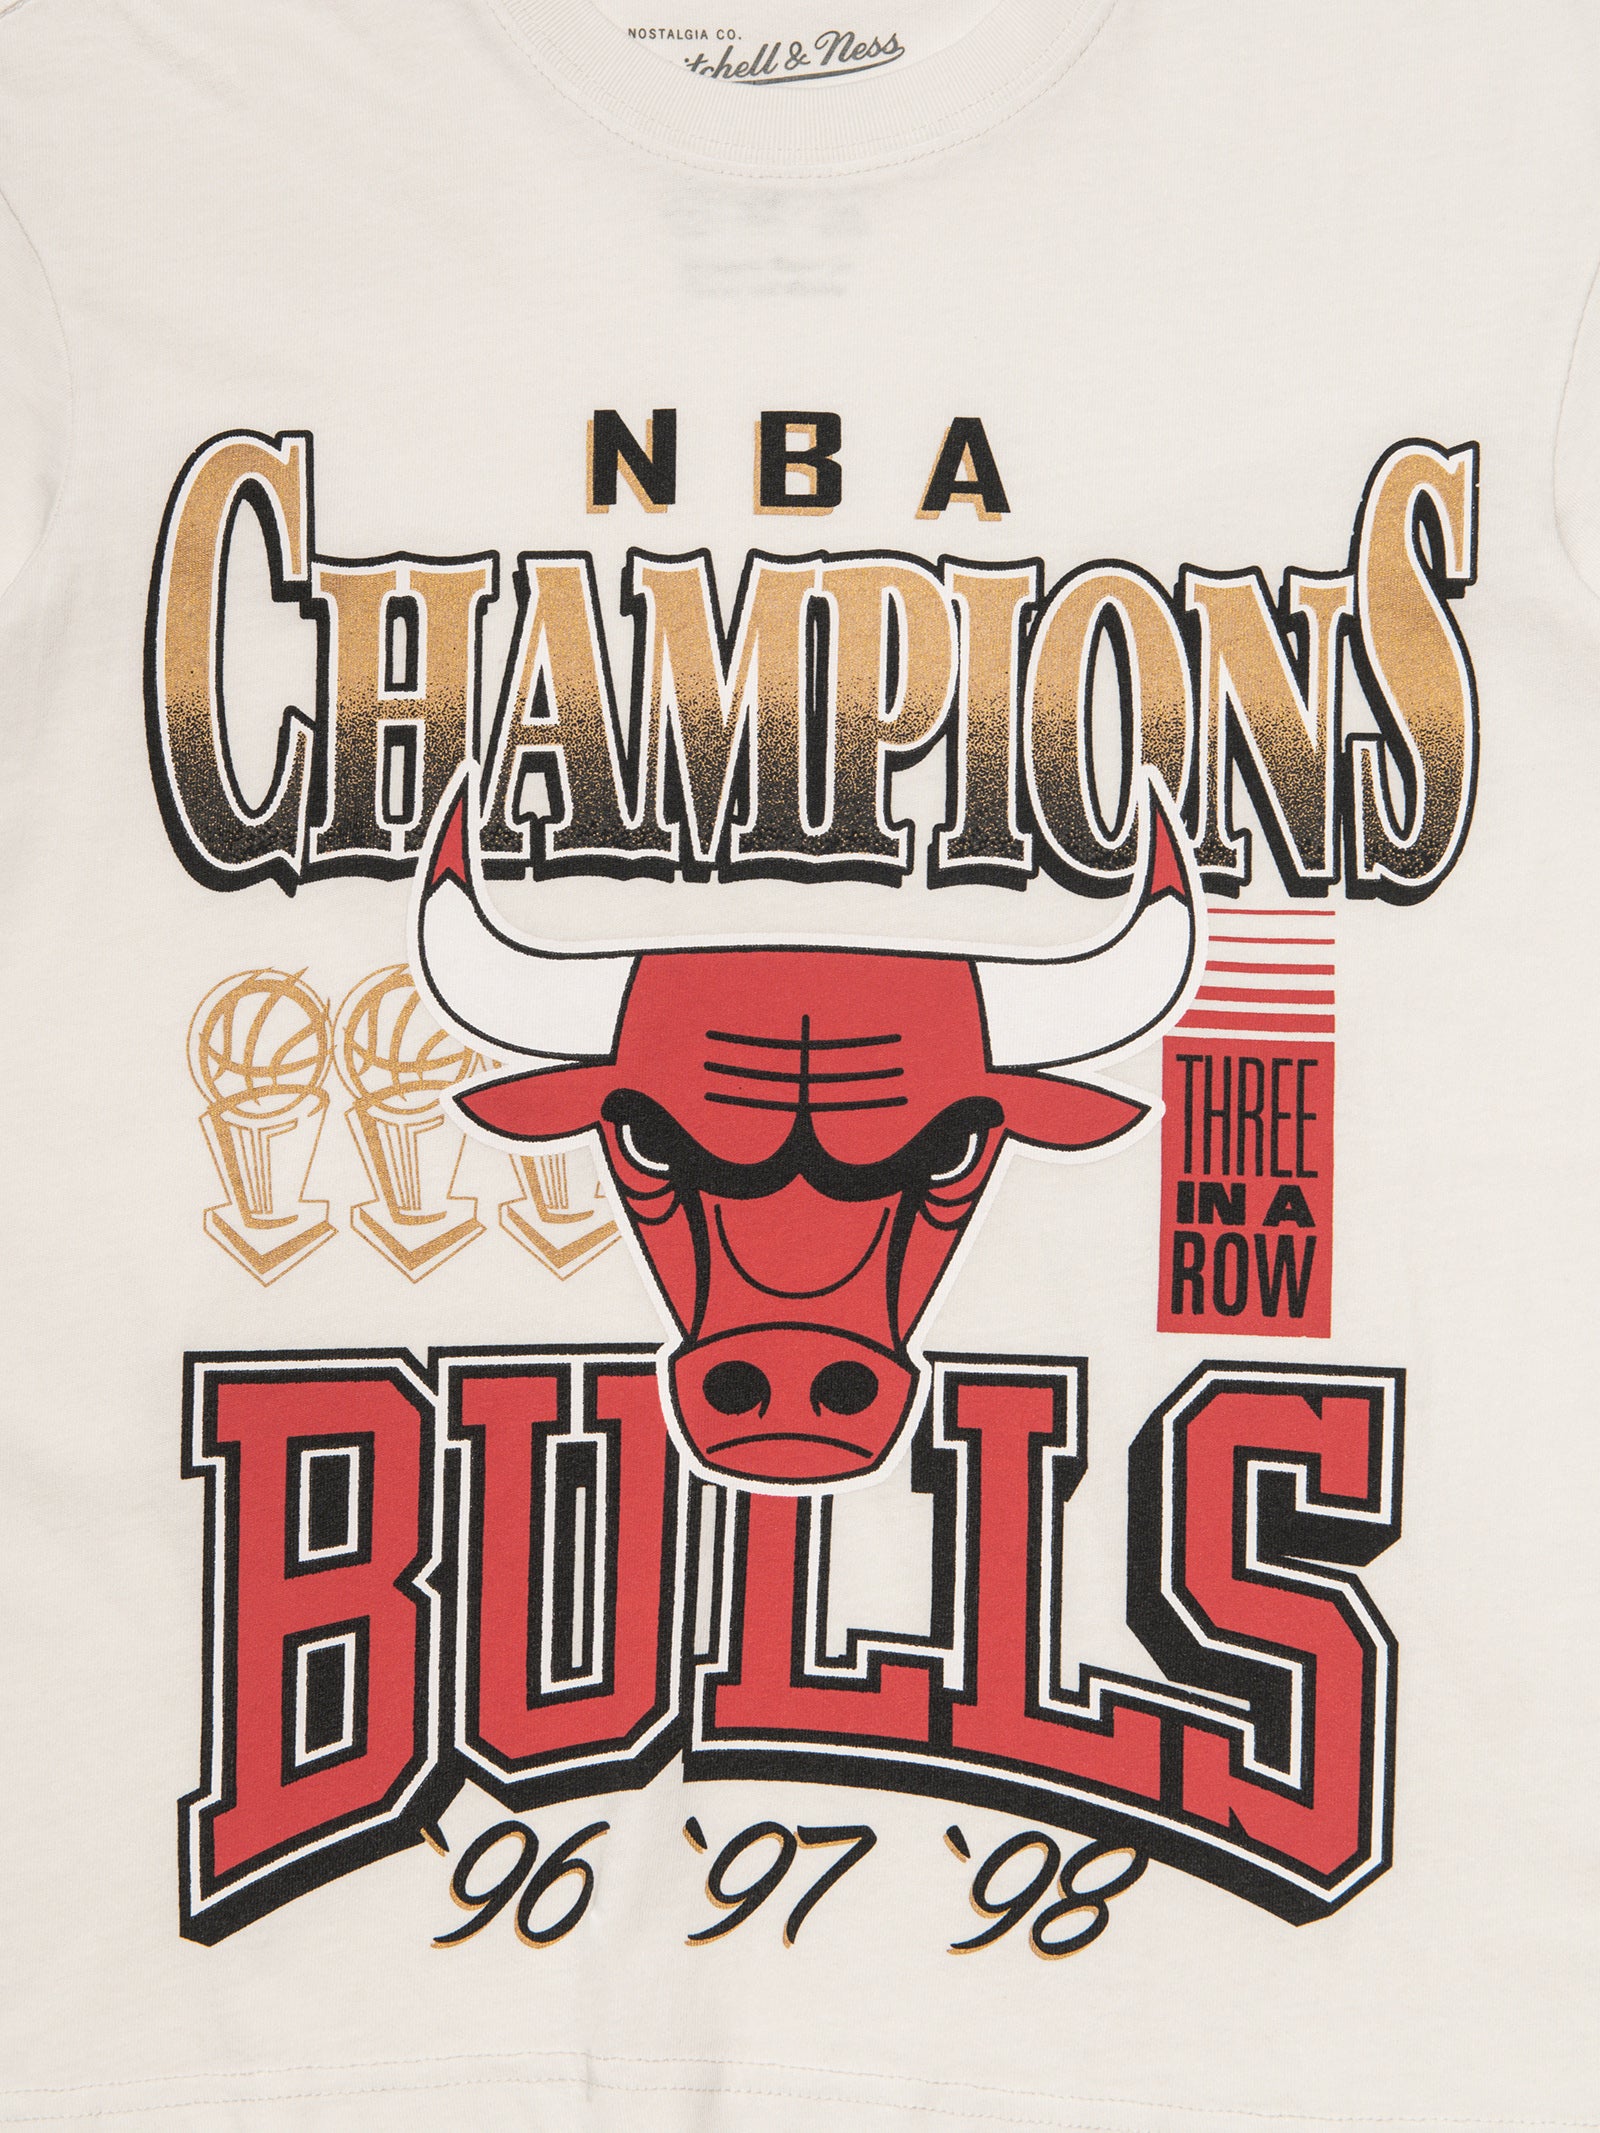 Chicago Bulls NBA Hoop T-Shirt in Faded Black - Glue Store NZ